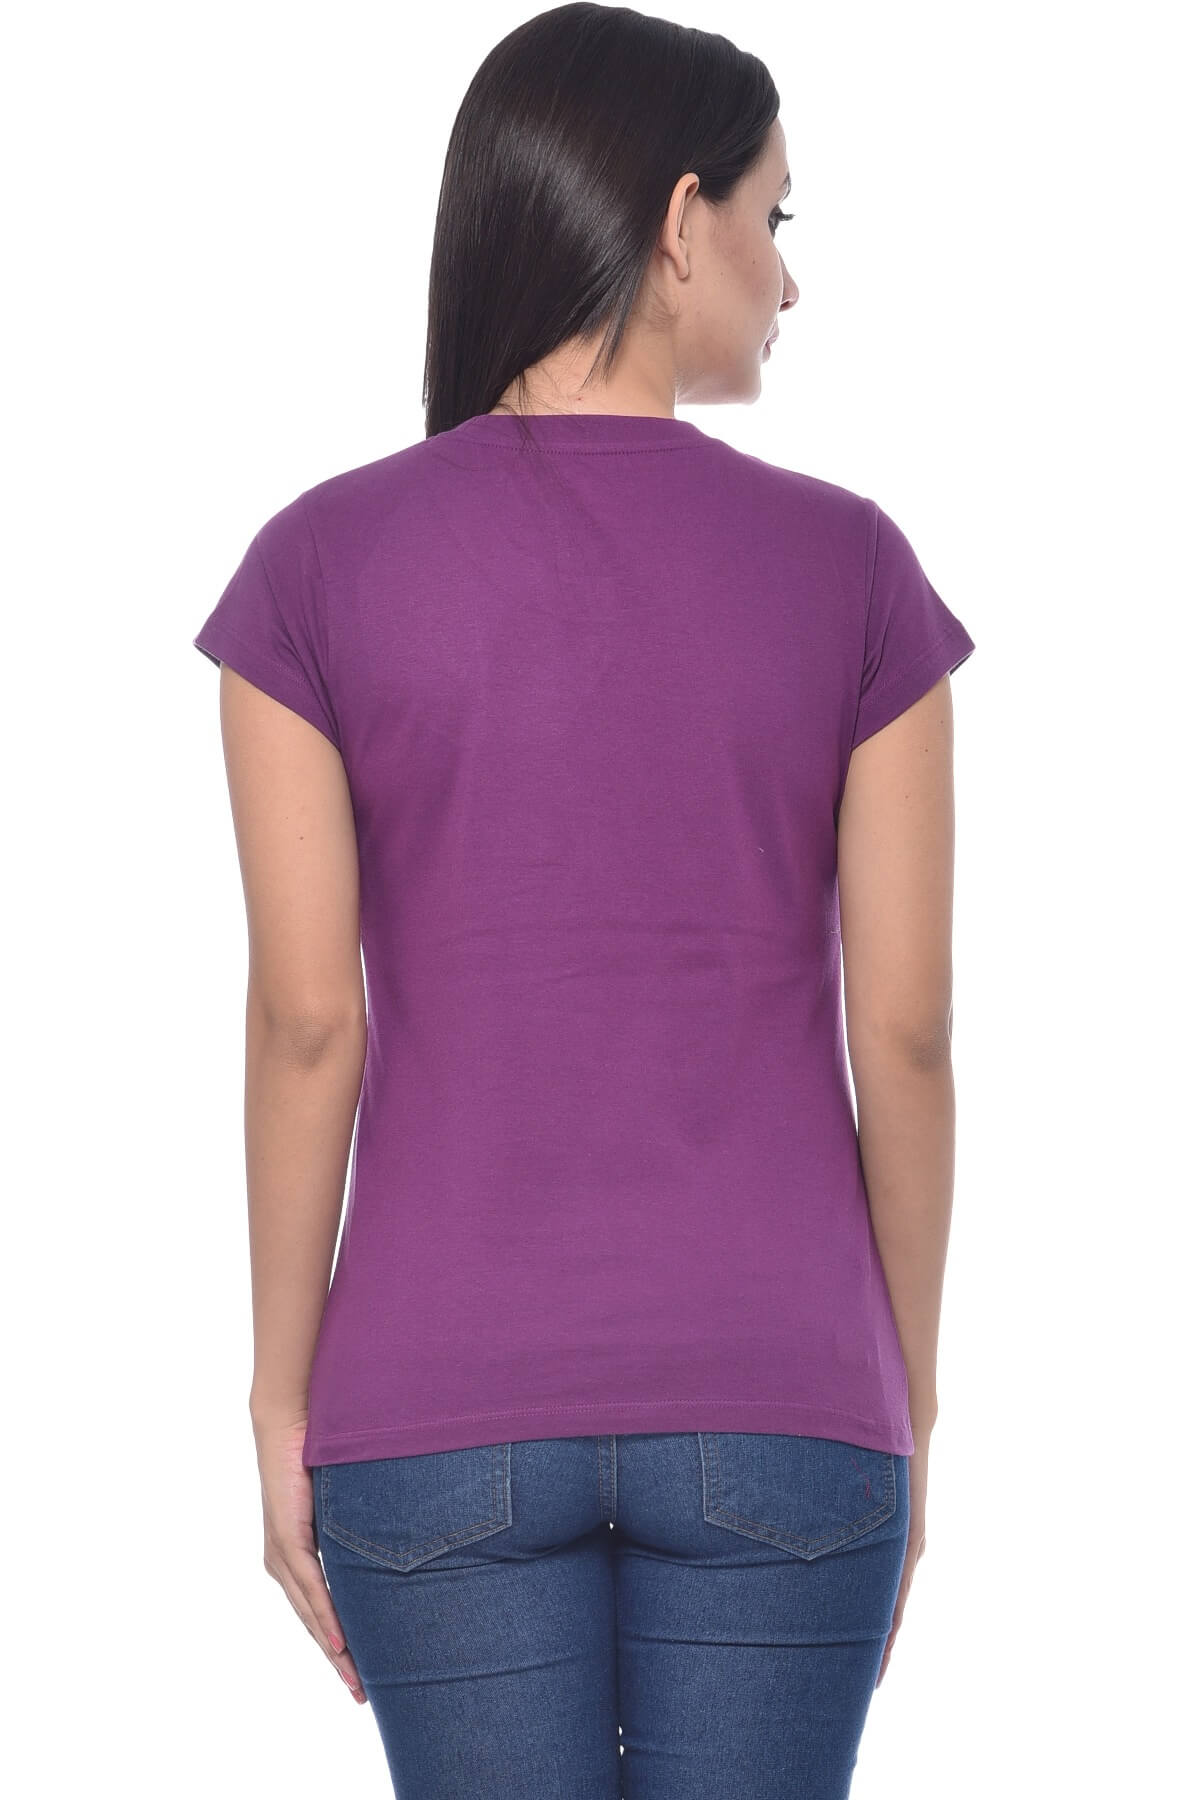 Pieces roll neck top in purple | ASOS